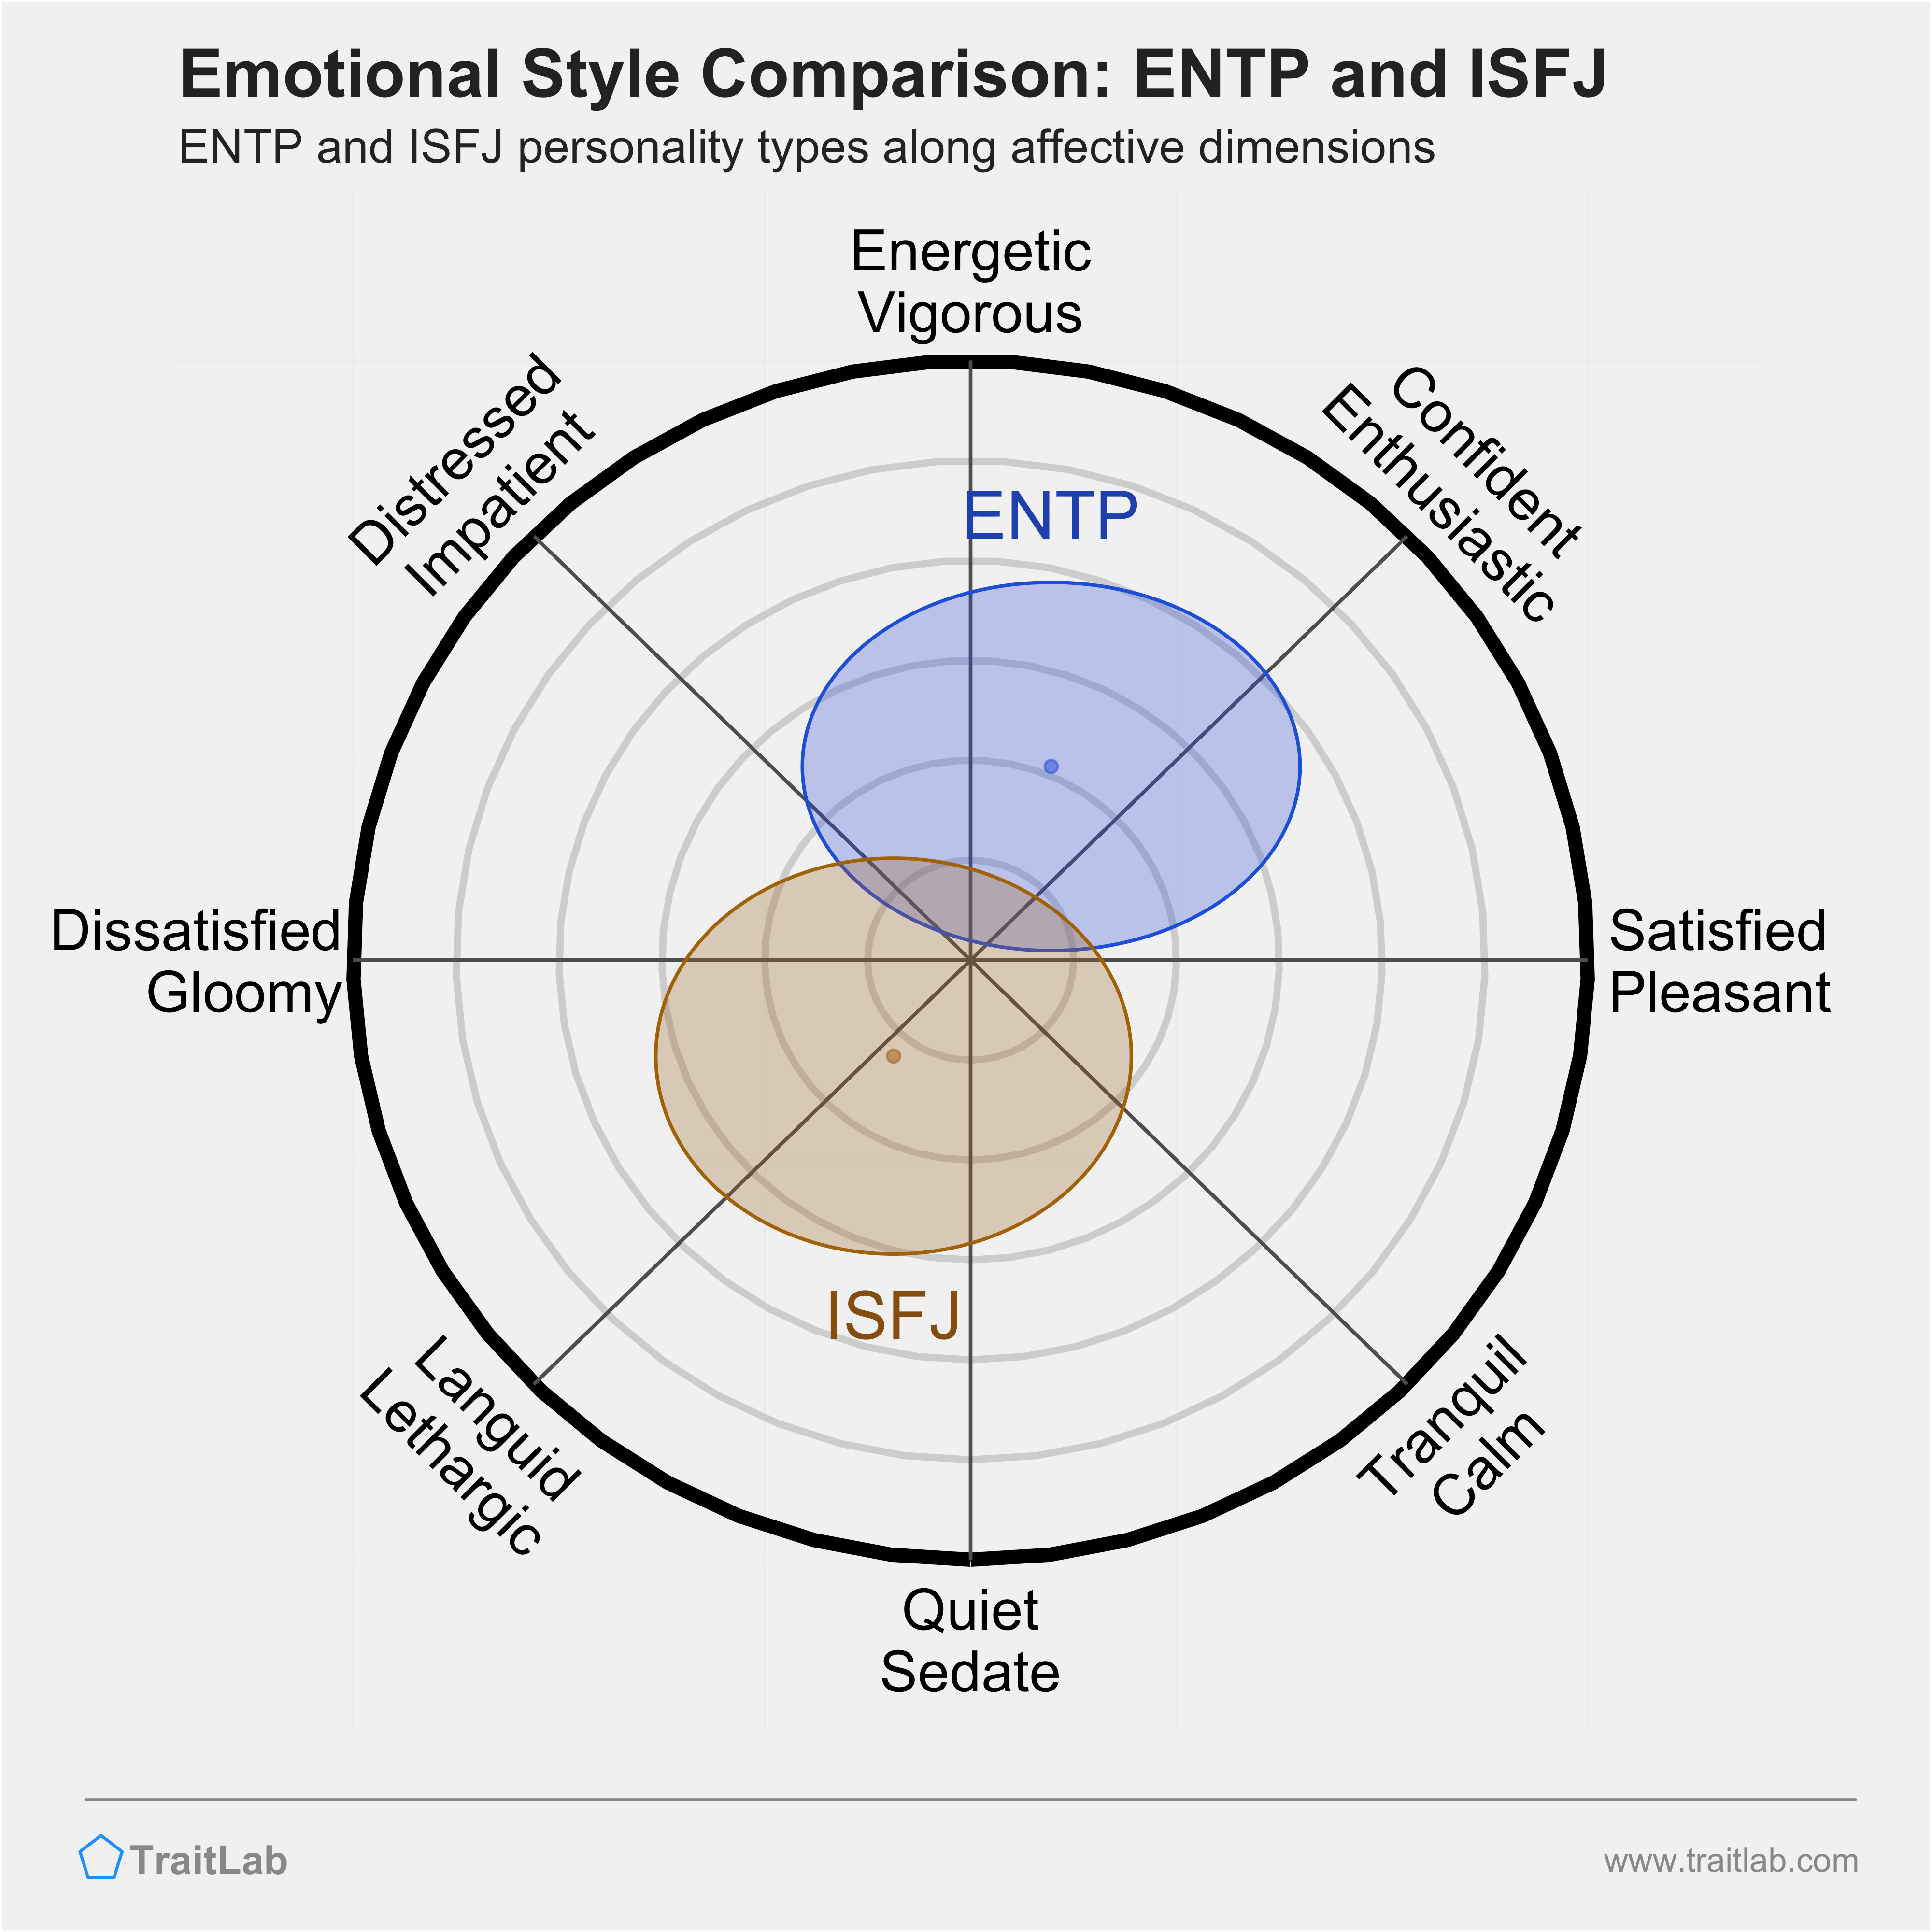 ENTP and ISFJ comparison across emotional (affective) dimensions